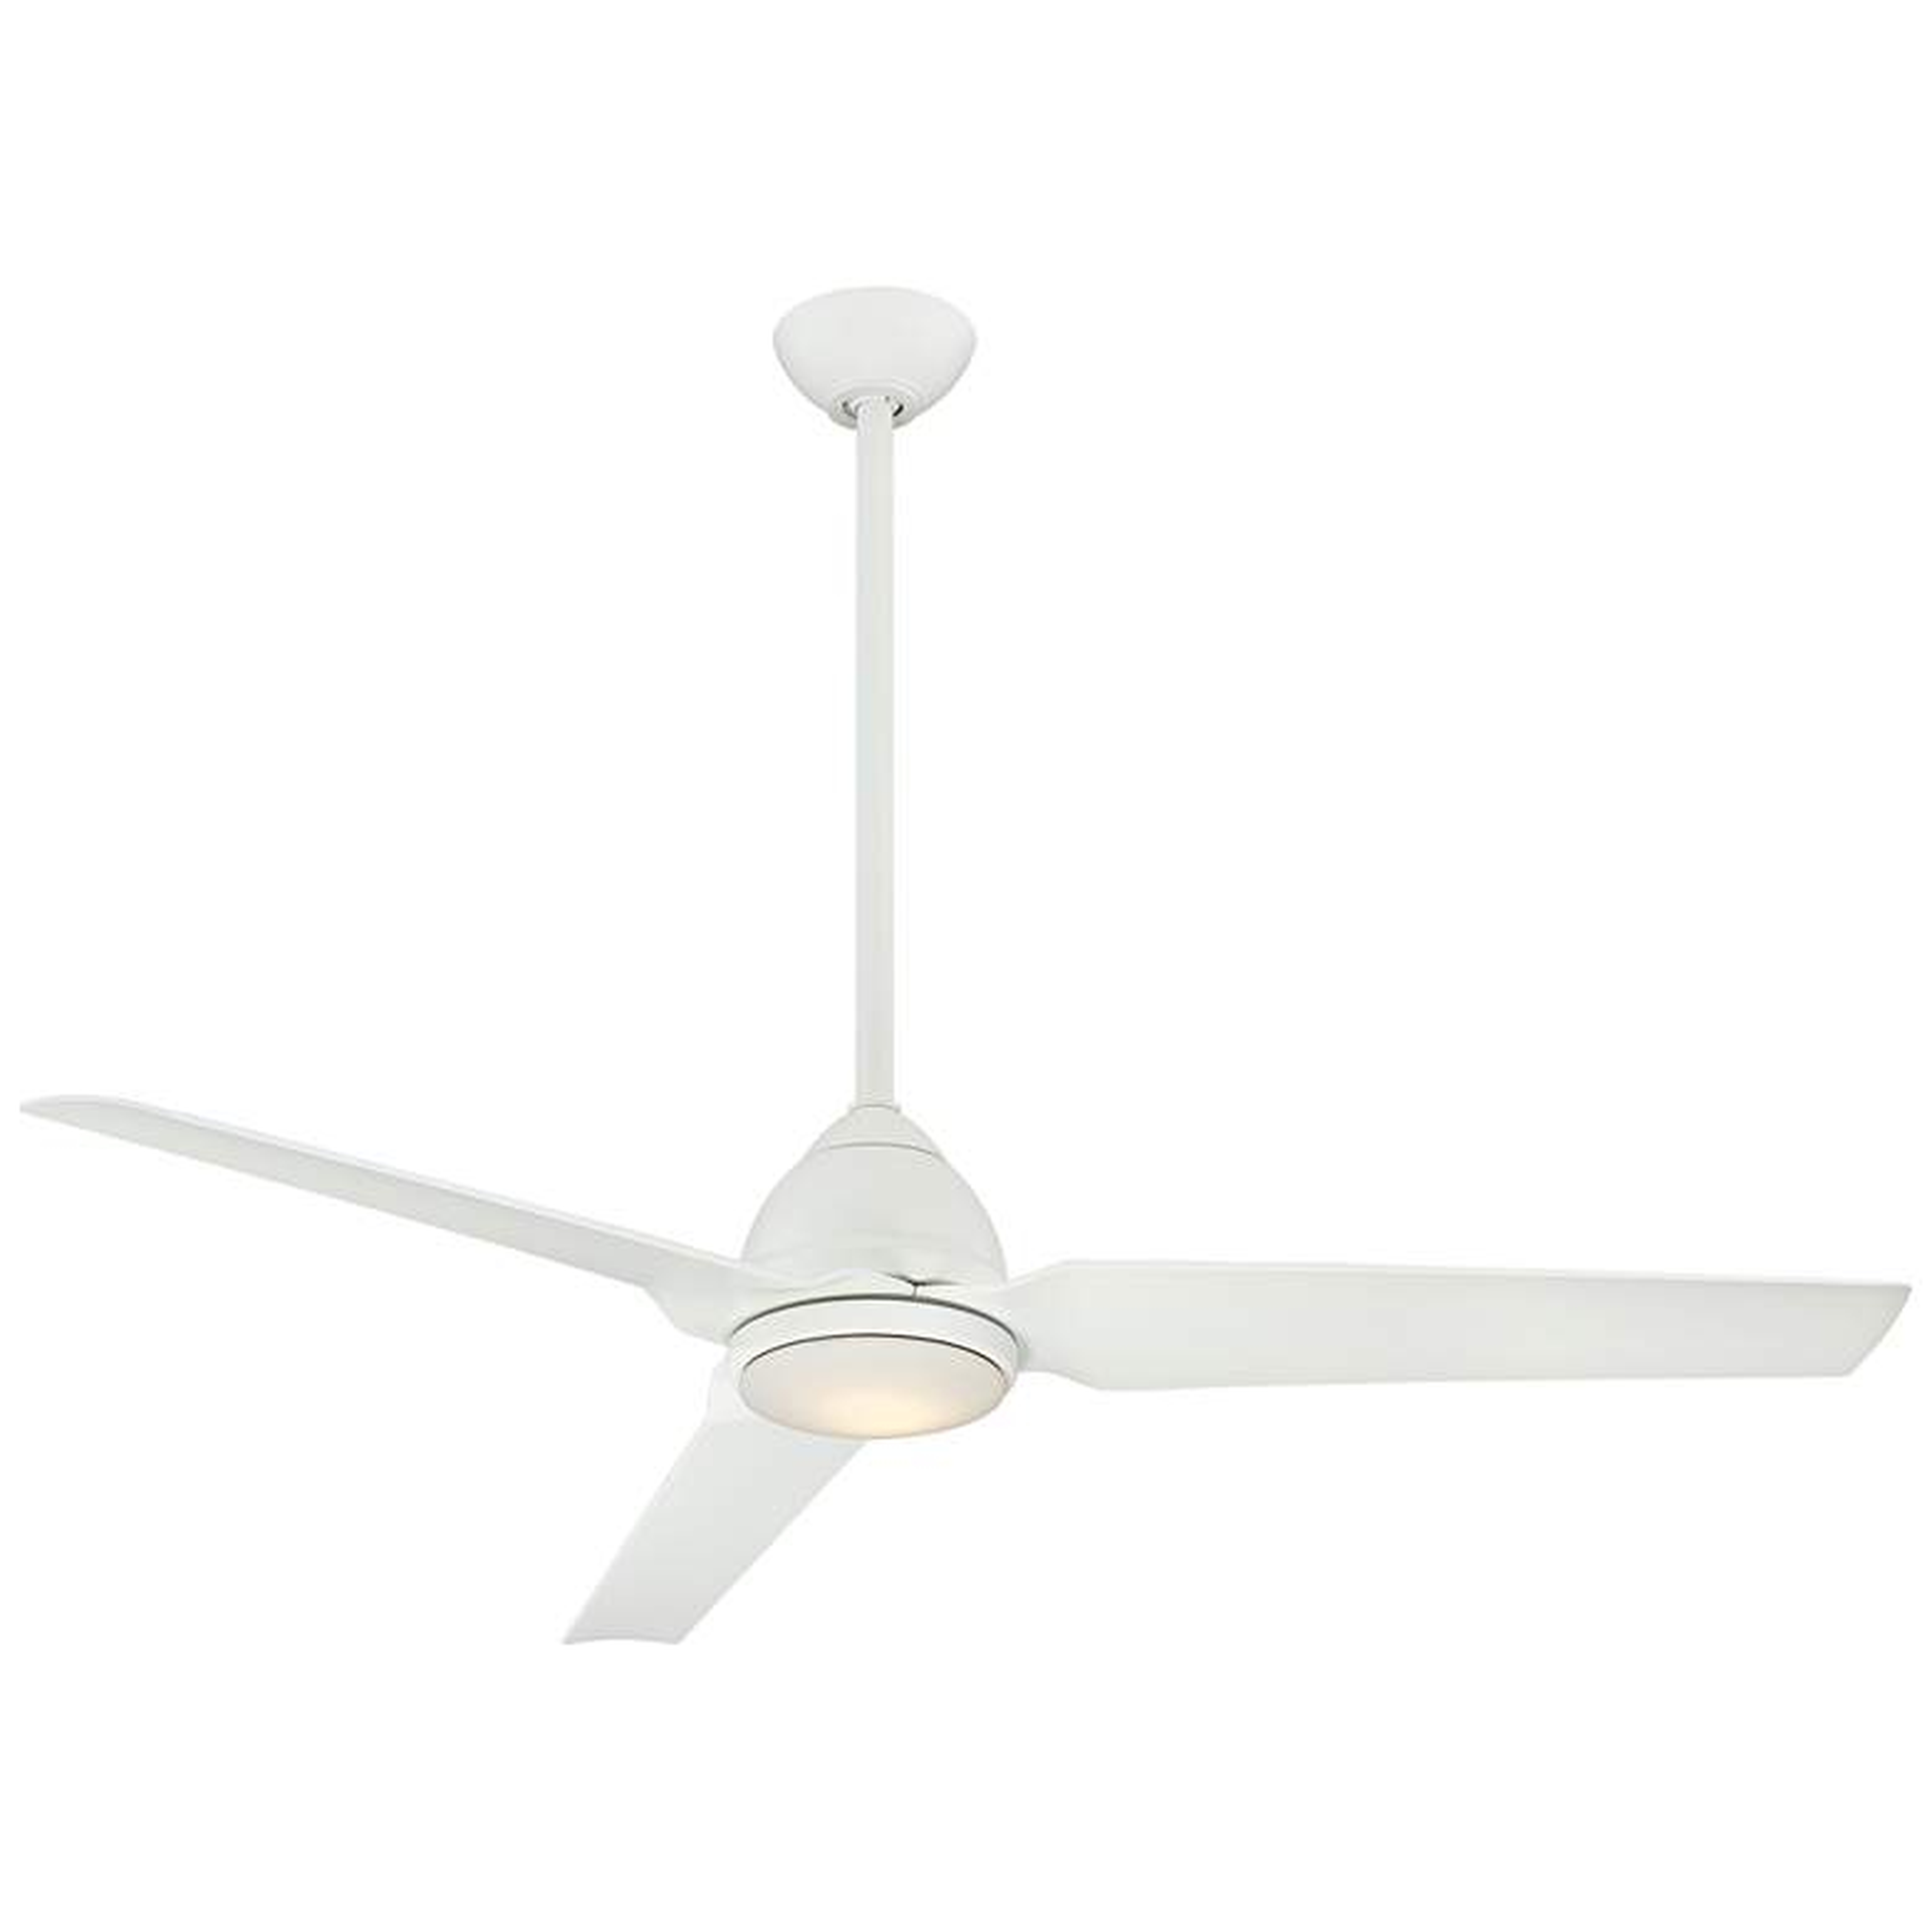 54" Minka Aire Java Flat White LED Ceiling Fan - Style # 9N886 - Lamps Plus